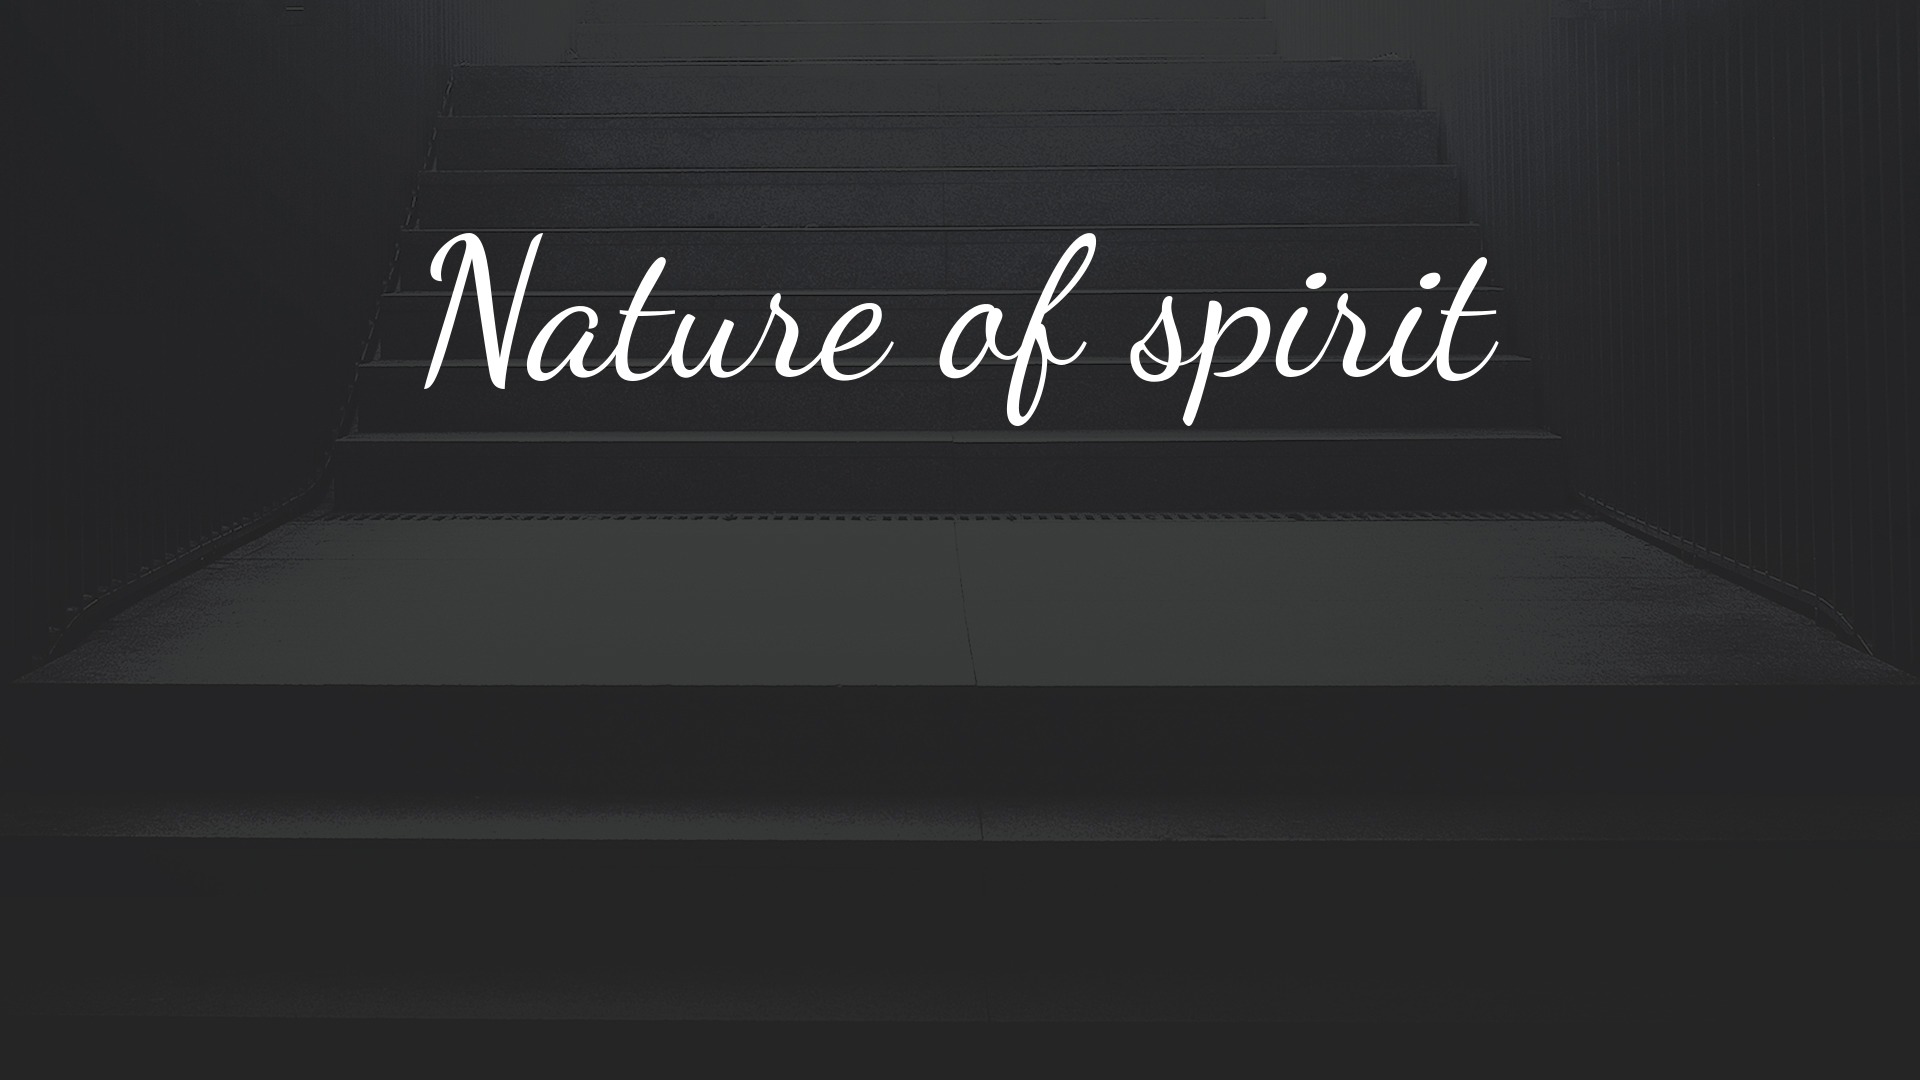 Nature of spirit